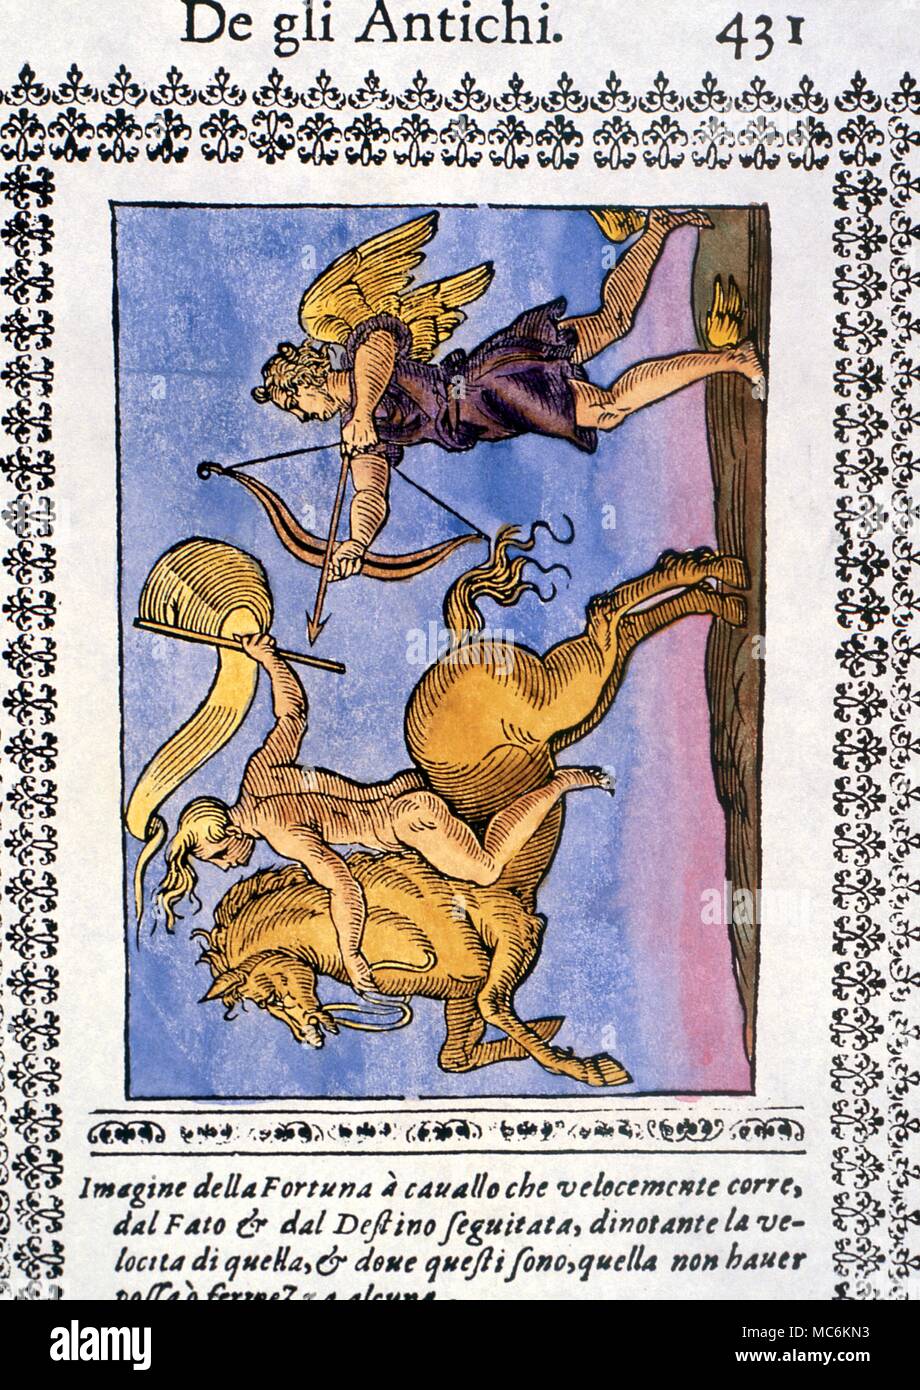 Greek Mythology - Fortune. Mythology of Fortune, who escapes those who are not quick in movement. From Comitis 'Mythologiae' - 17th century woodcut. Stock Photo